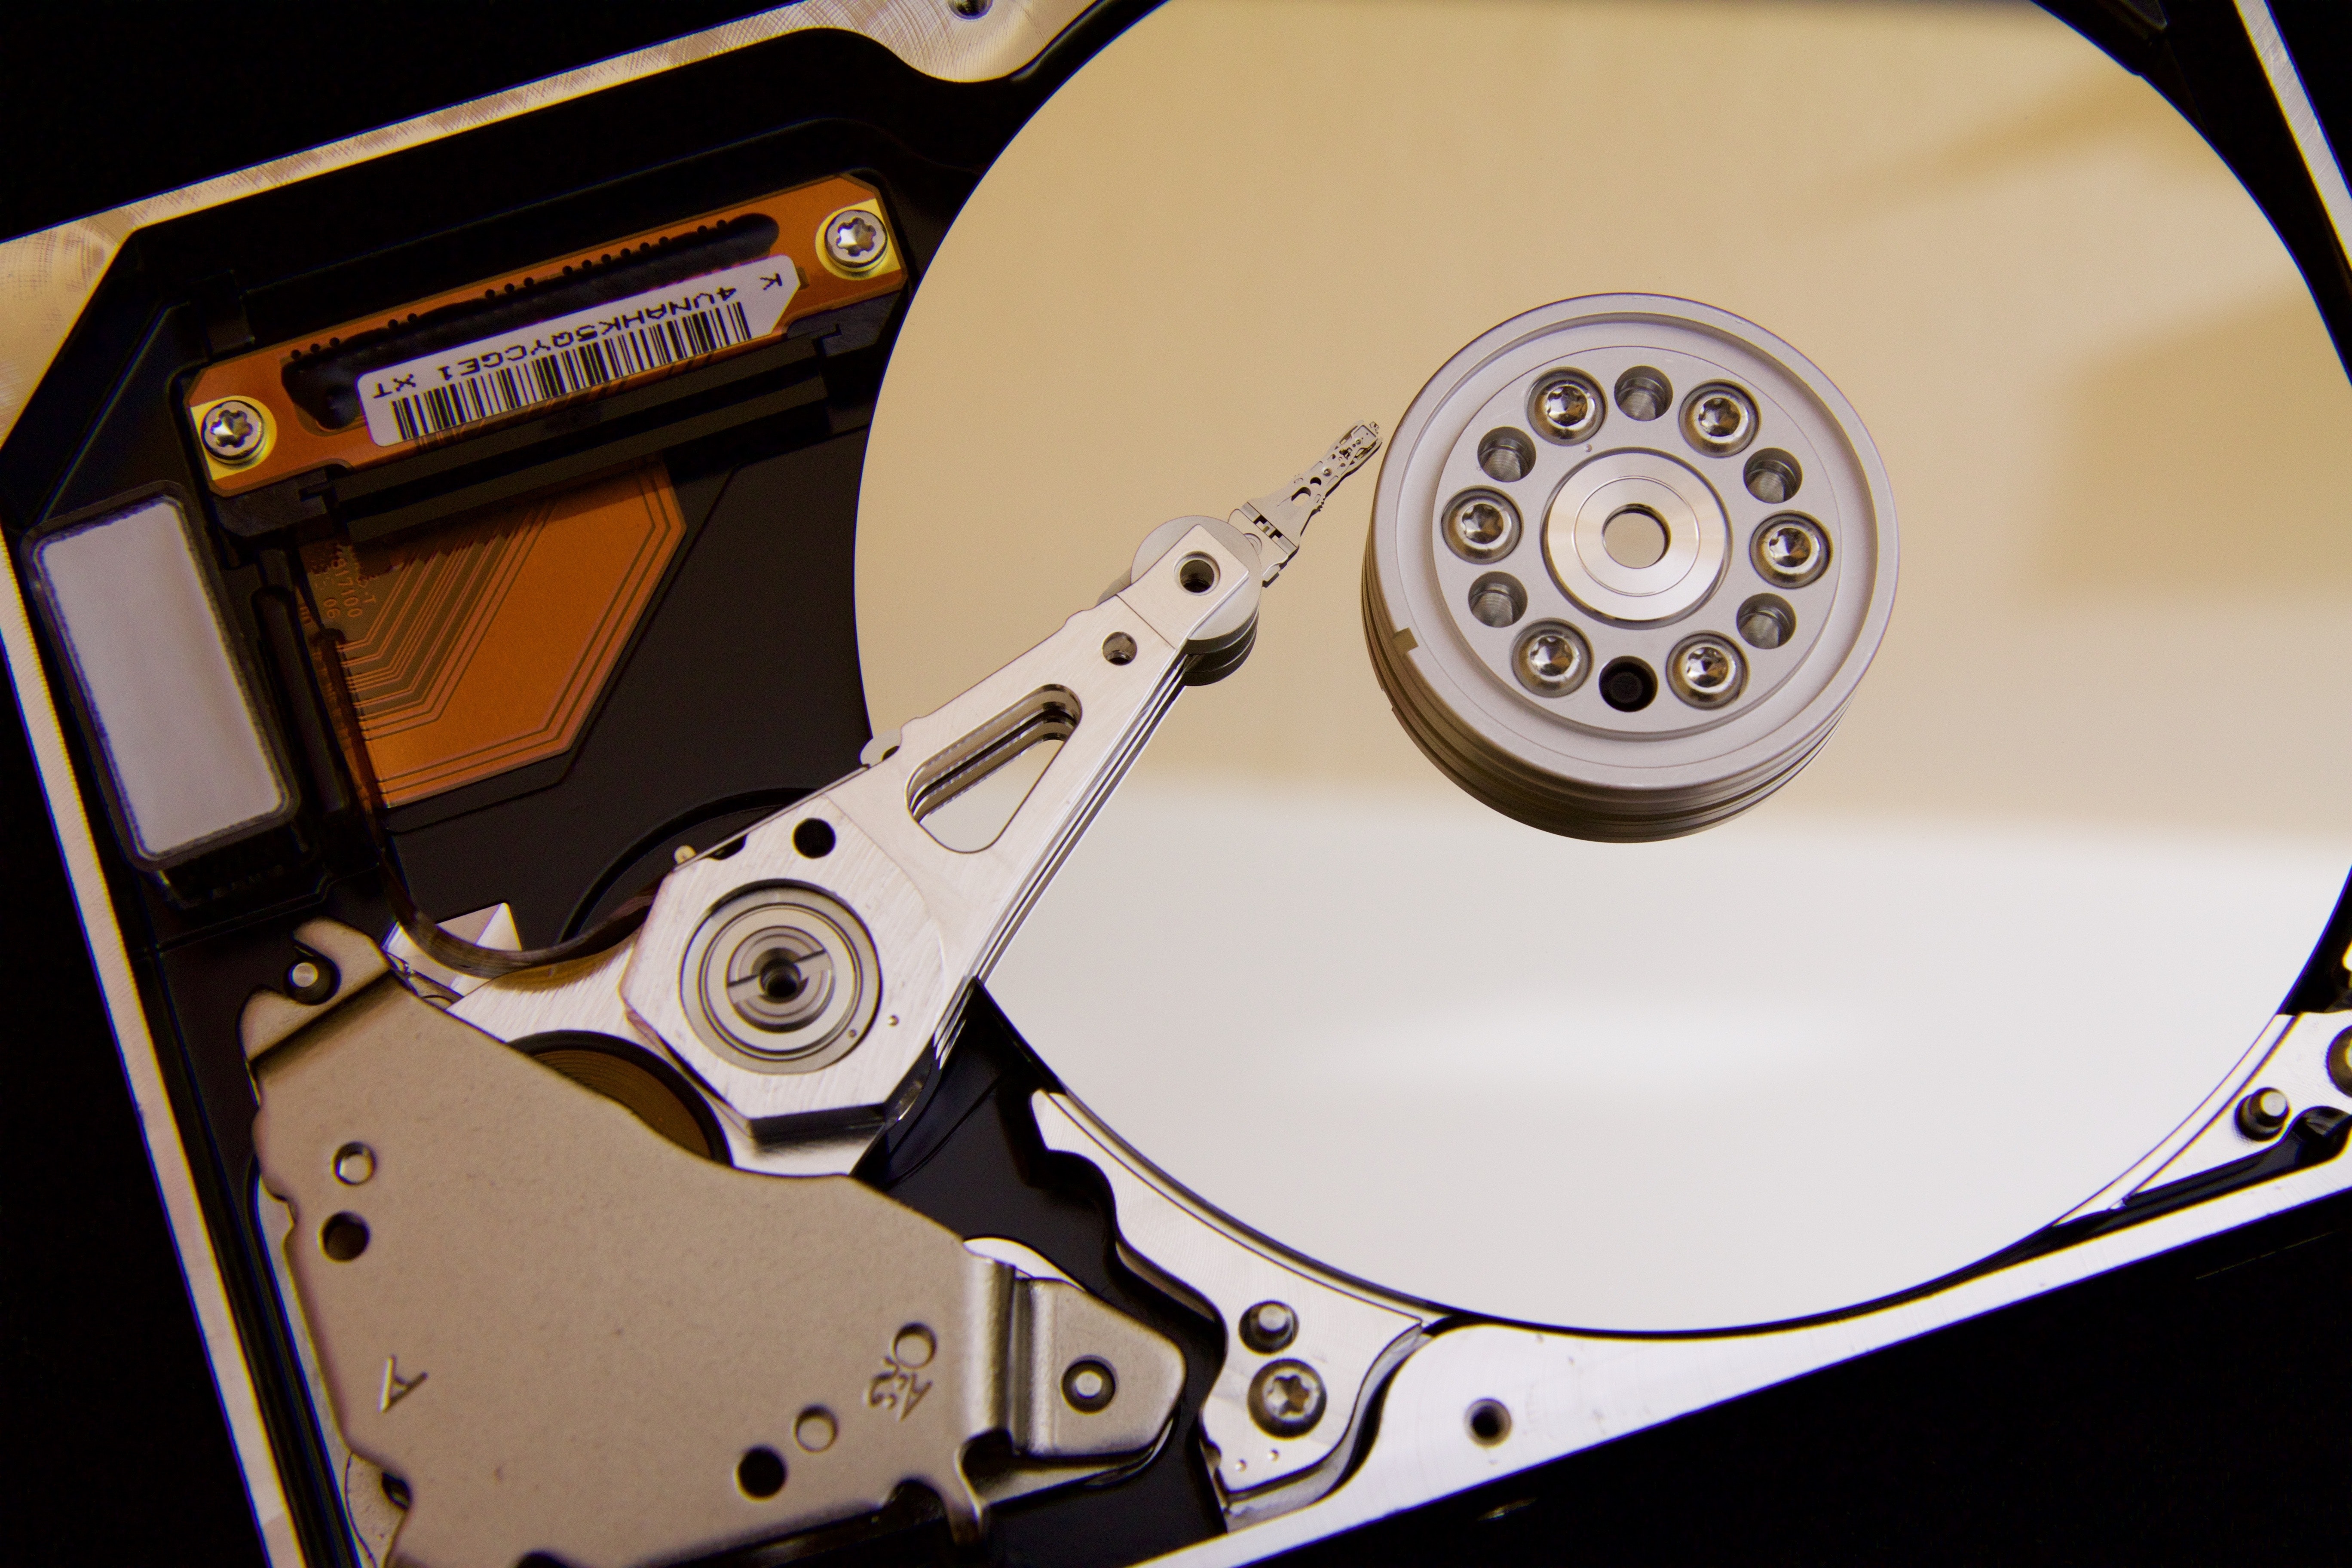 Silver hard drive interals photo